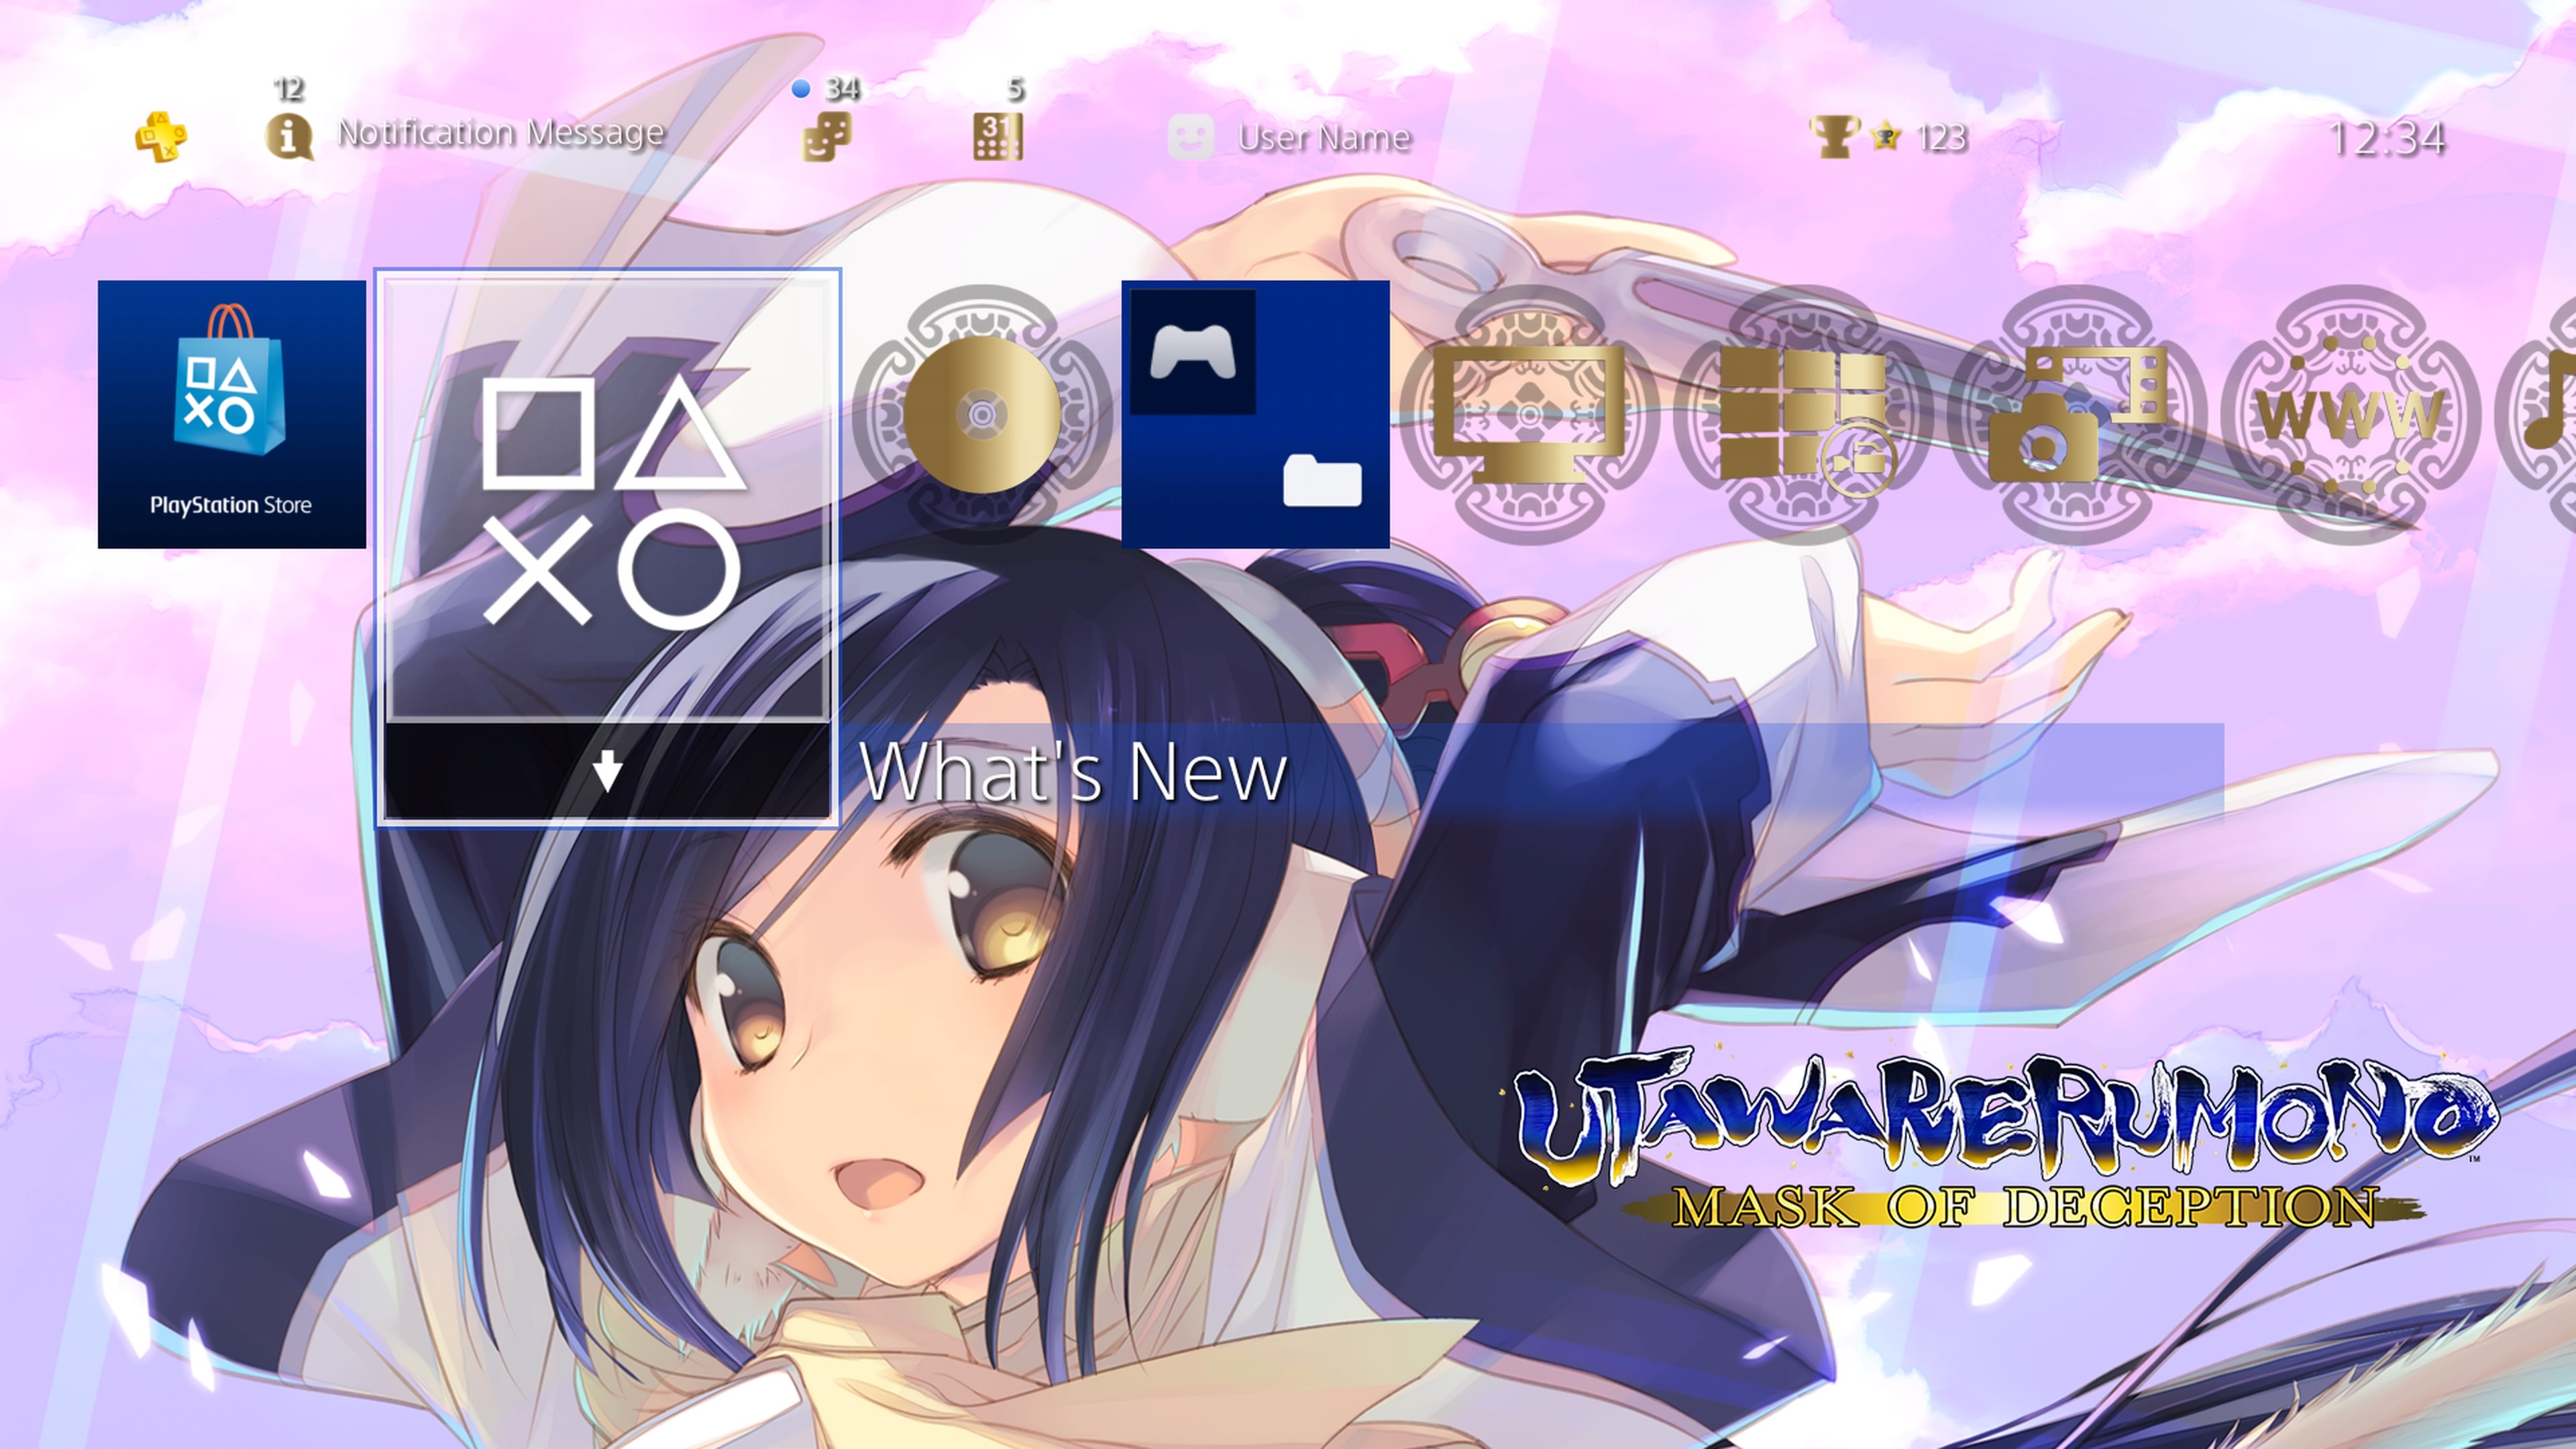 Utawarerumono: Mask of Deception PS4 and PS Vita themes now available -  Gematsu